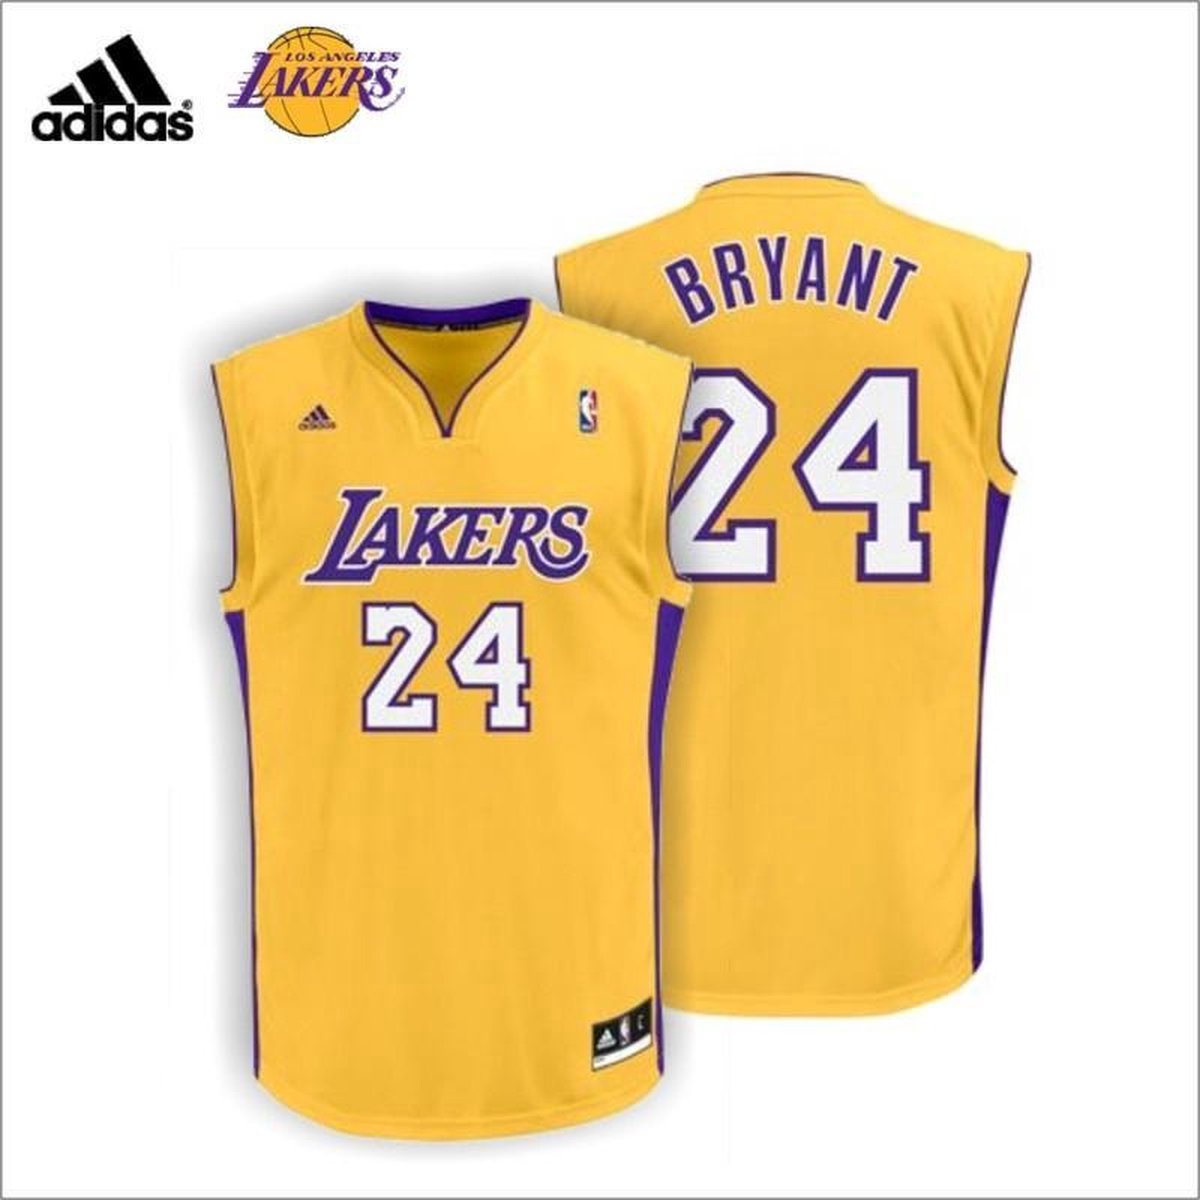 onaangenaam dubbele Spreekwoord Adidas NBA Jersey LA Lakers geel/paars maat XL | bol.com